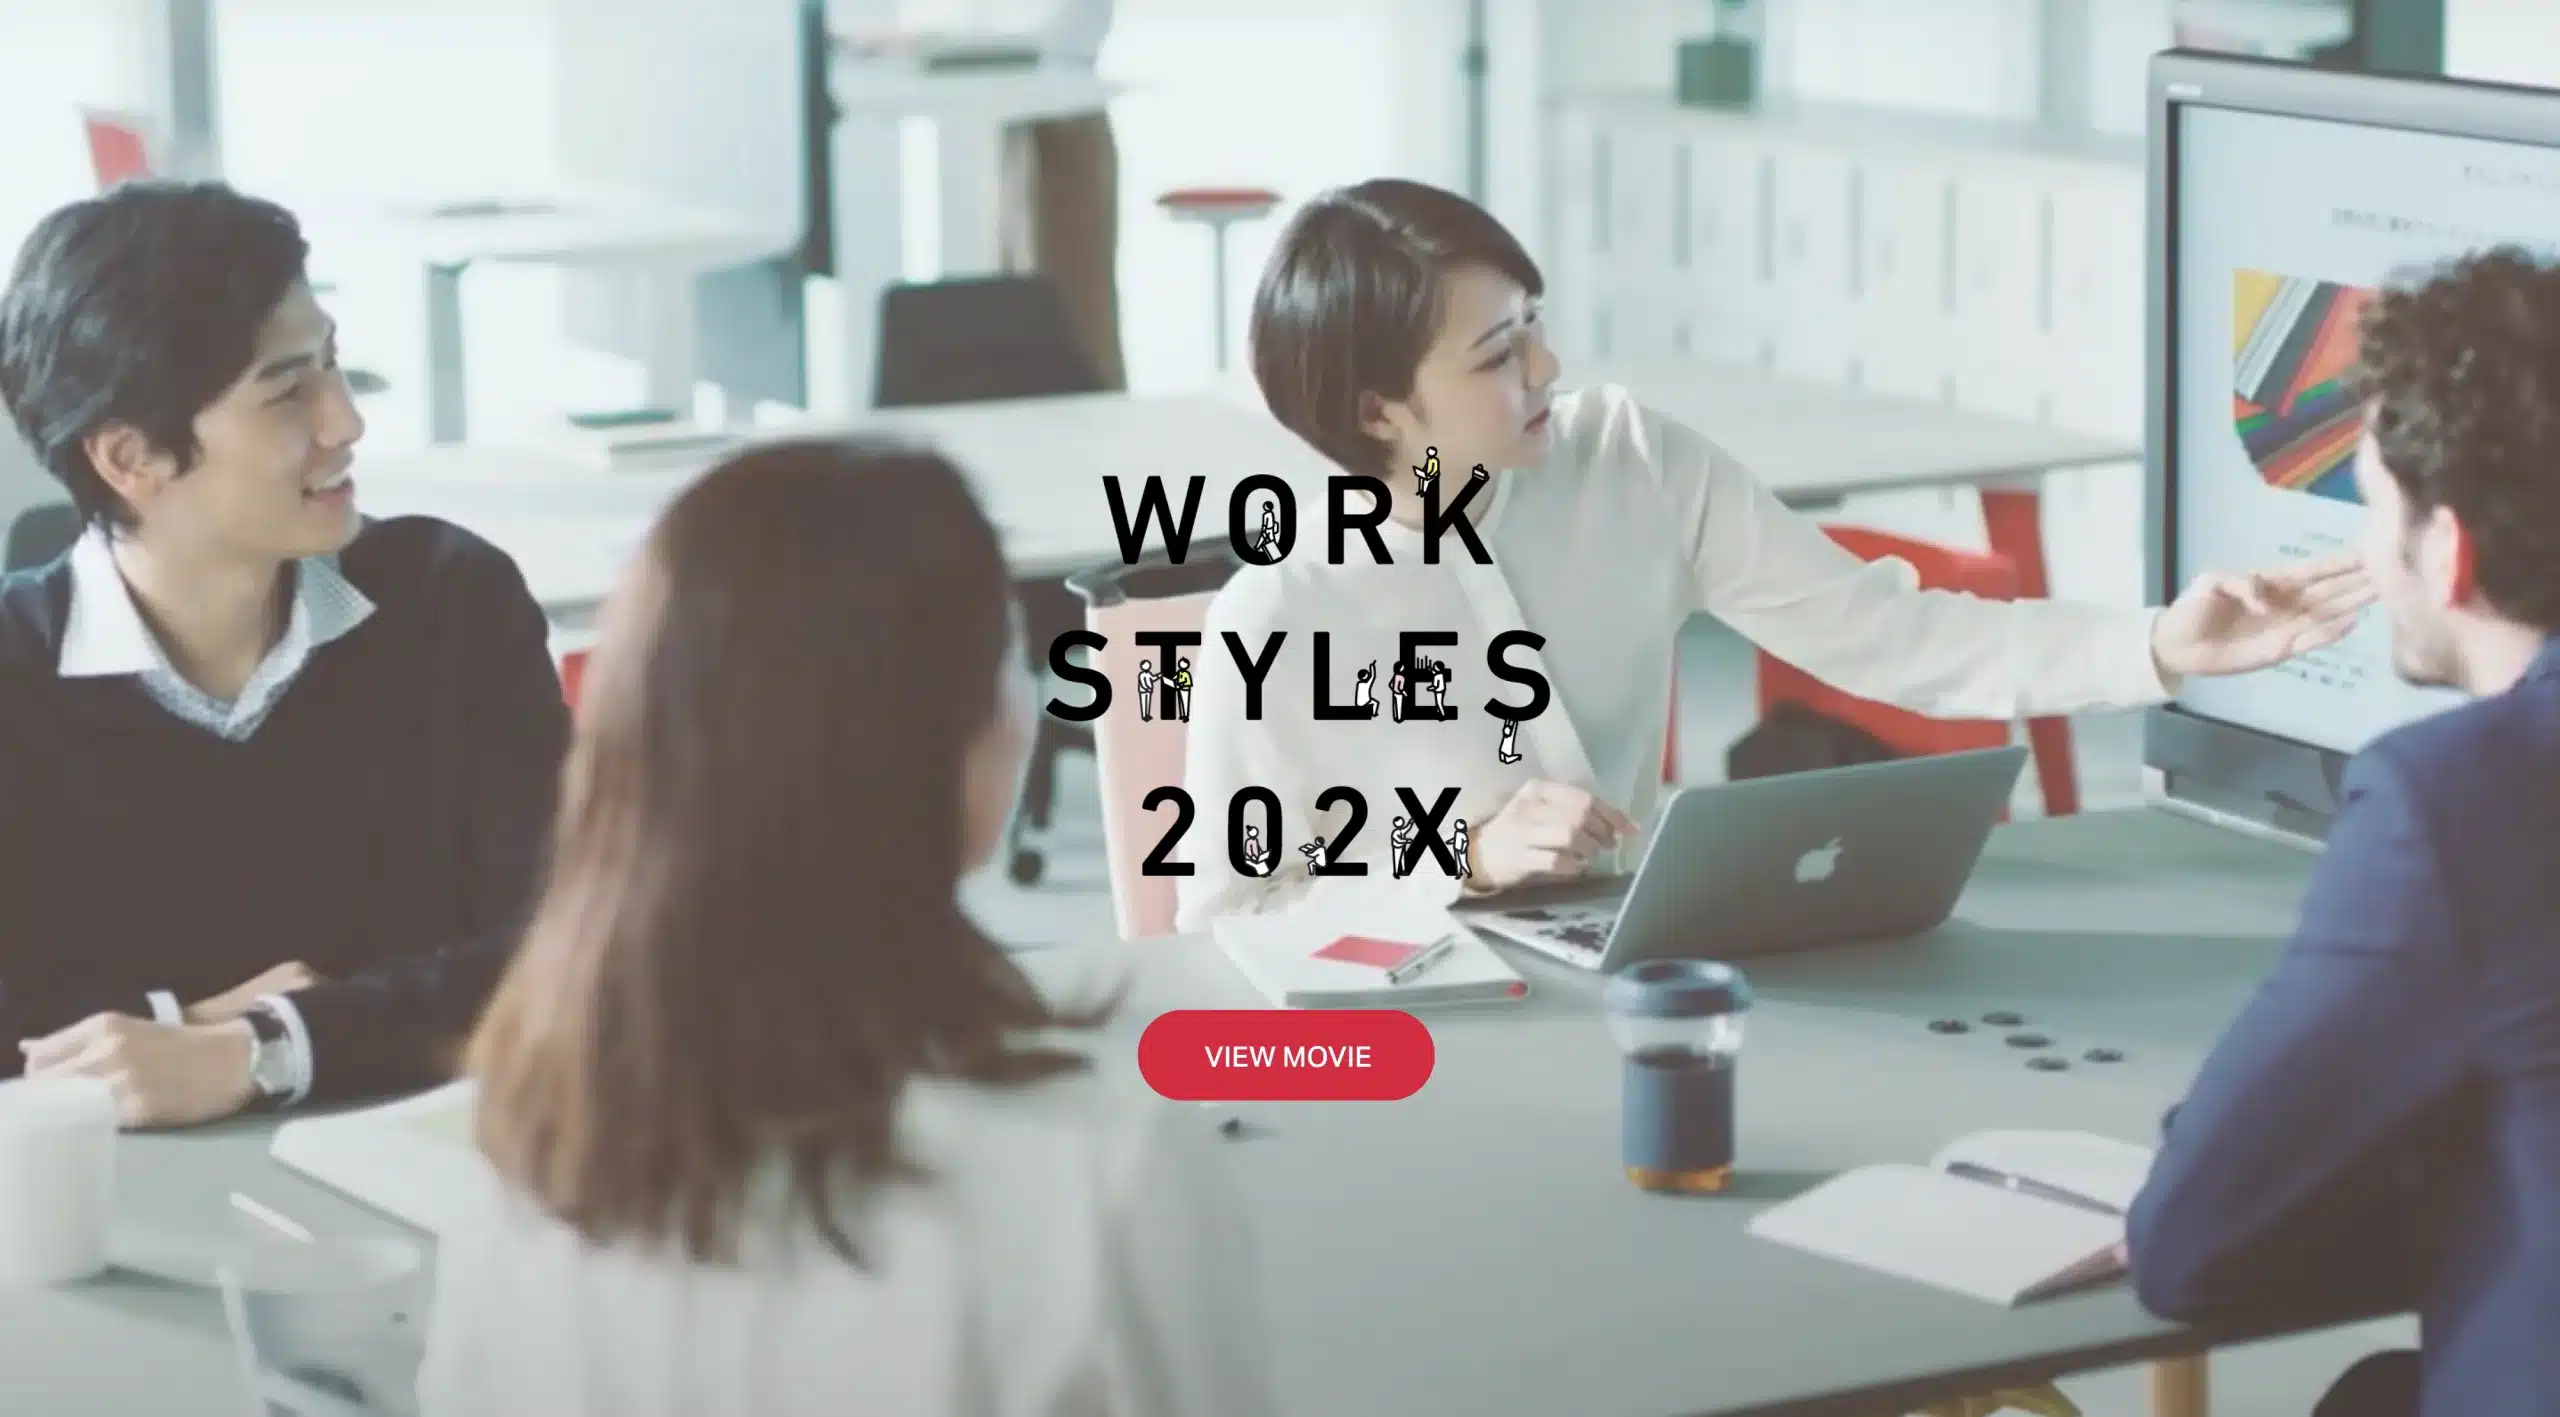 Work Styles 202X